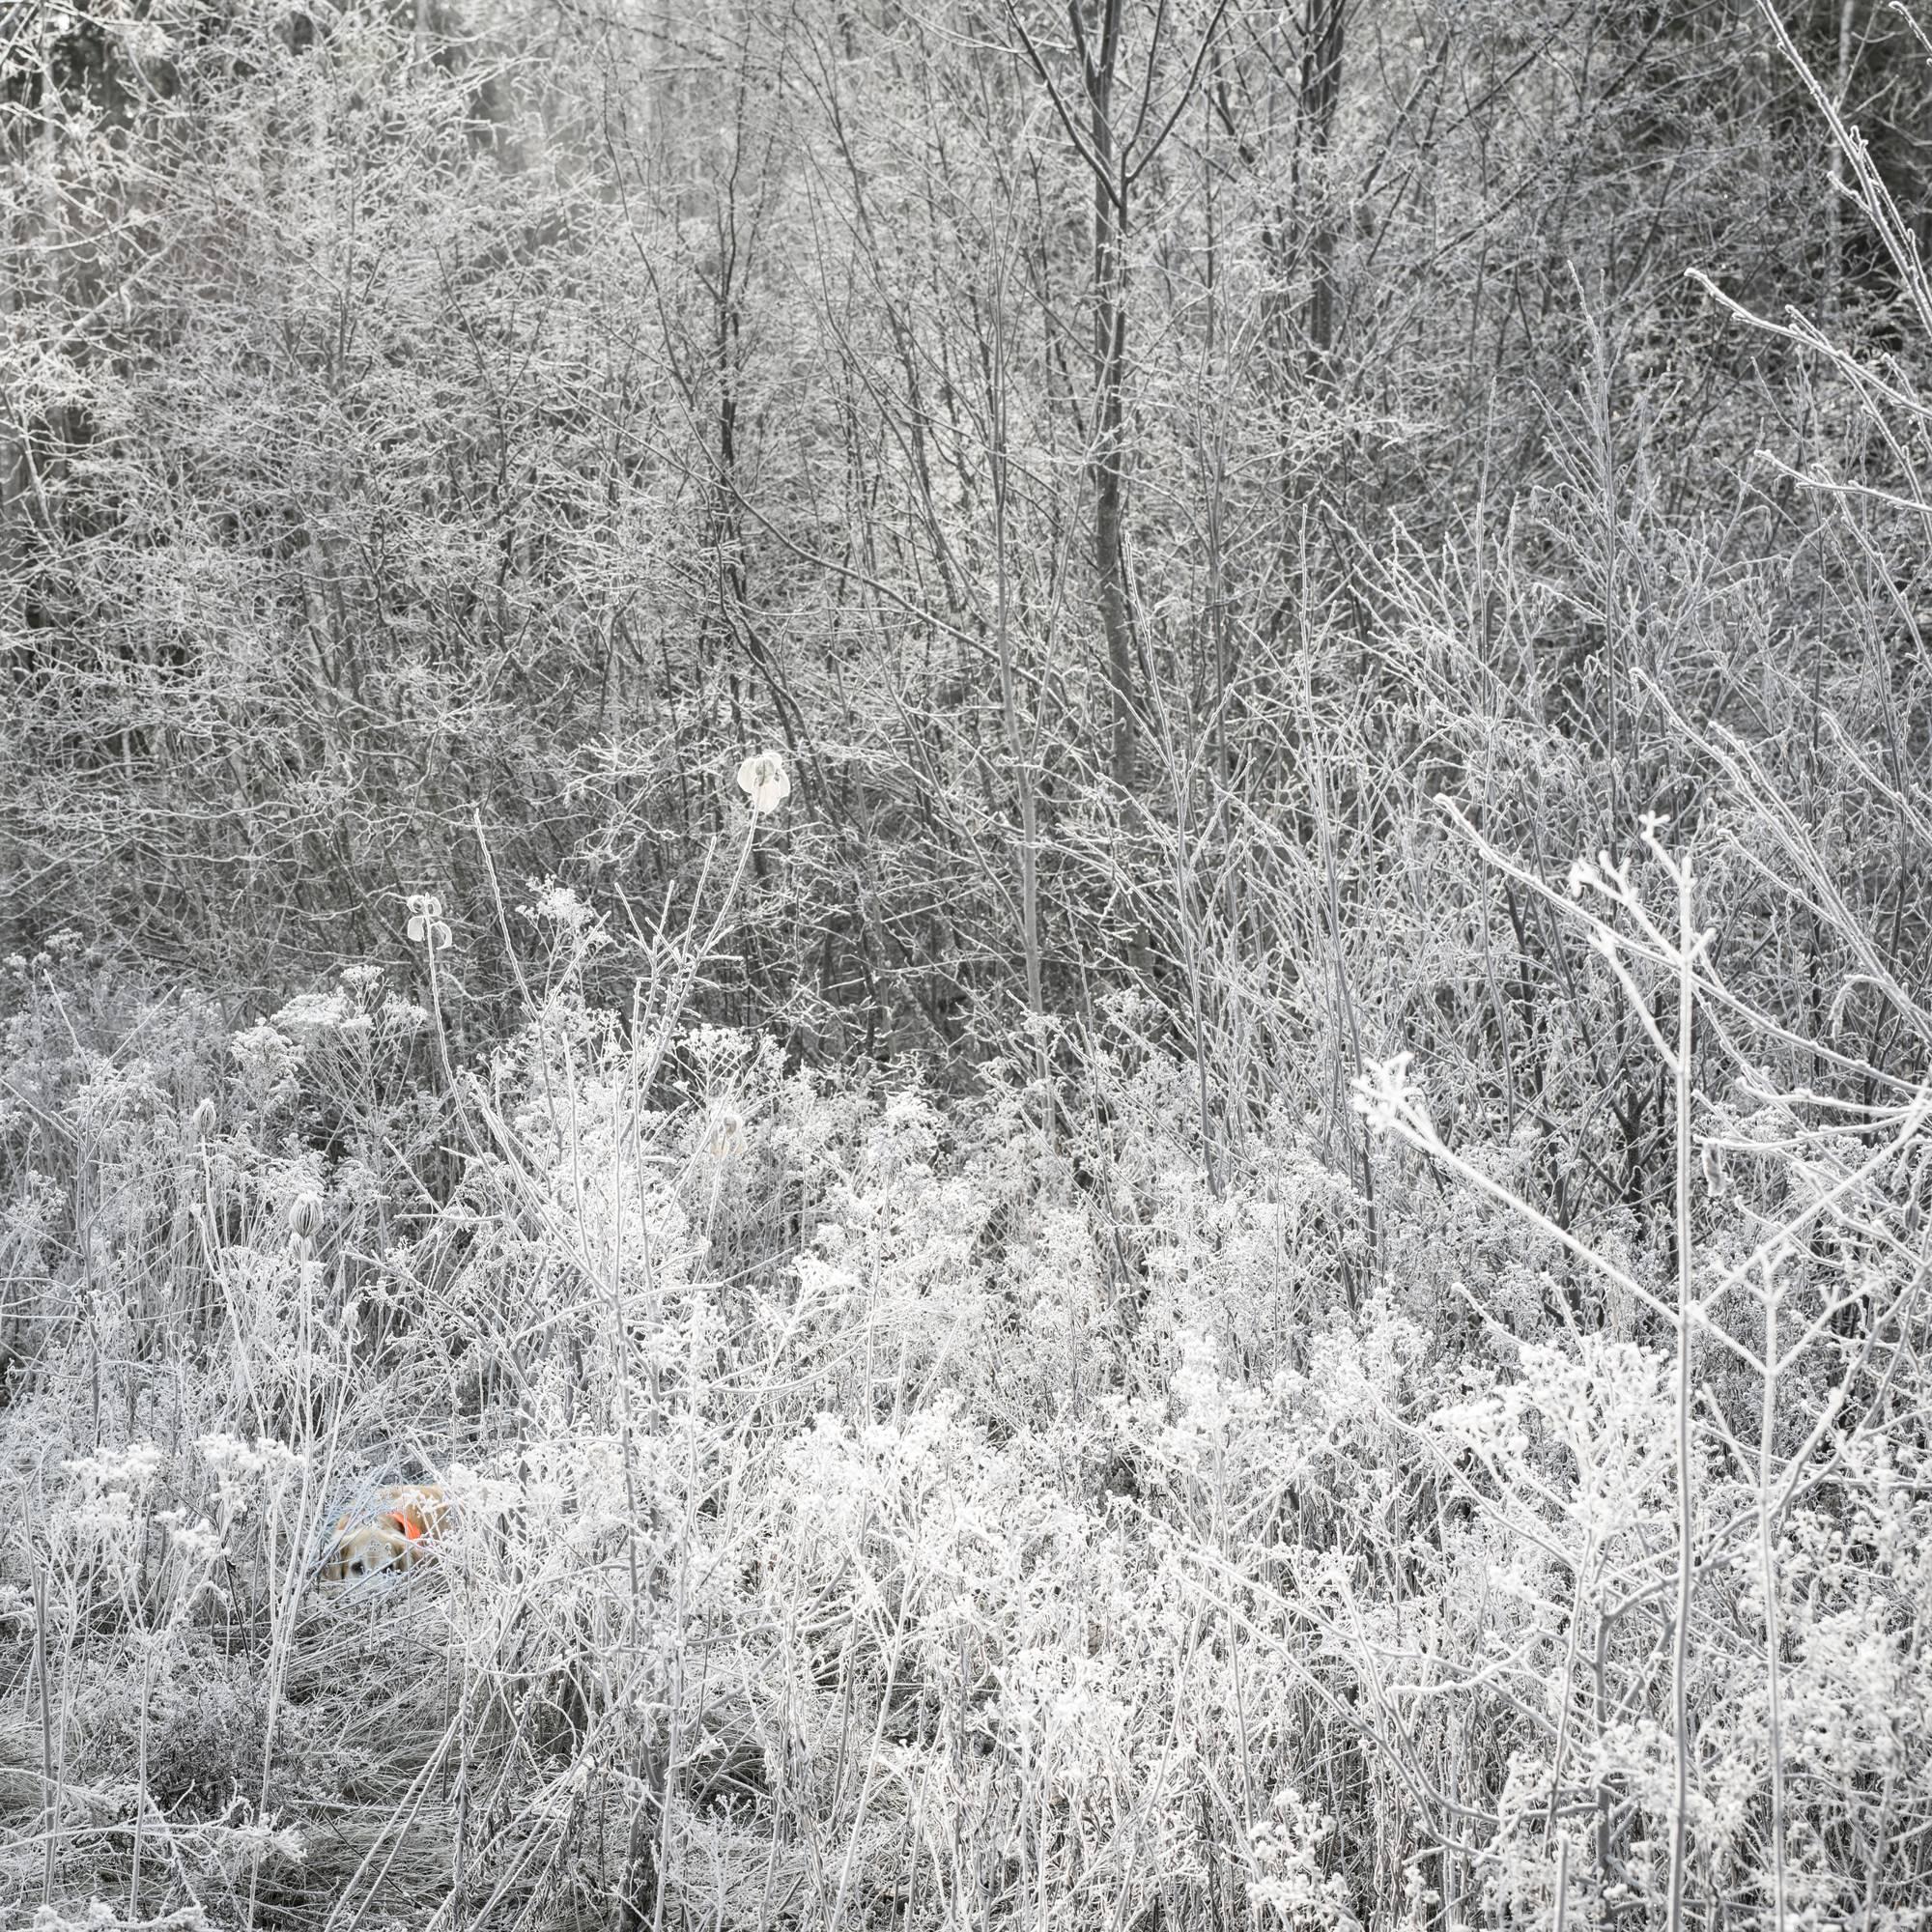 Cig Harvey Landscape Photograph - First Frost, Scarlet